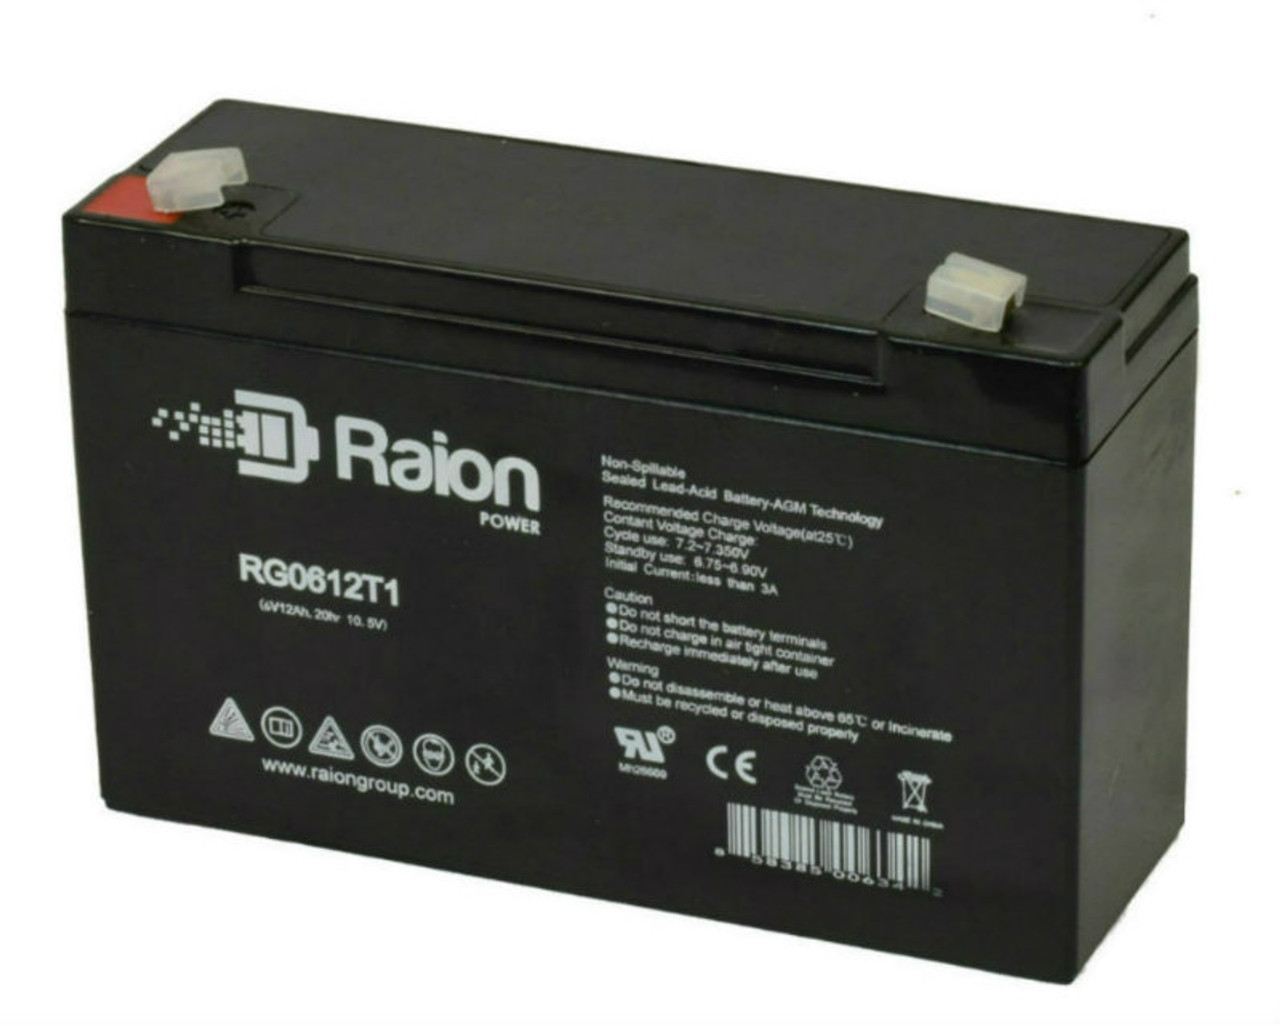 Raion Power RG06120T1 6V 12Ah Replacement UPS Battery Cartridge for Best Power Fortress LI 750 BAT-0063